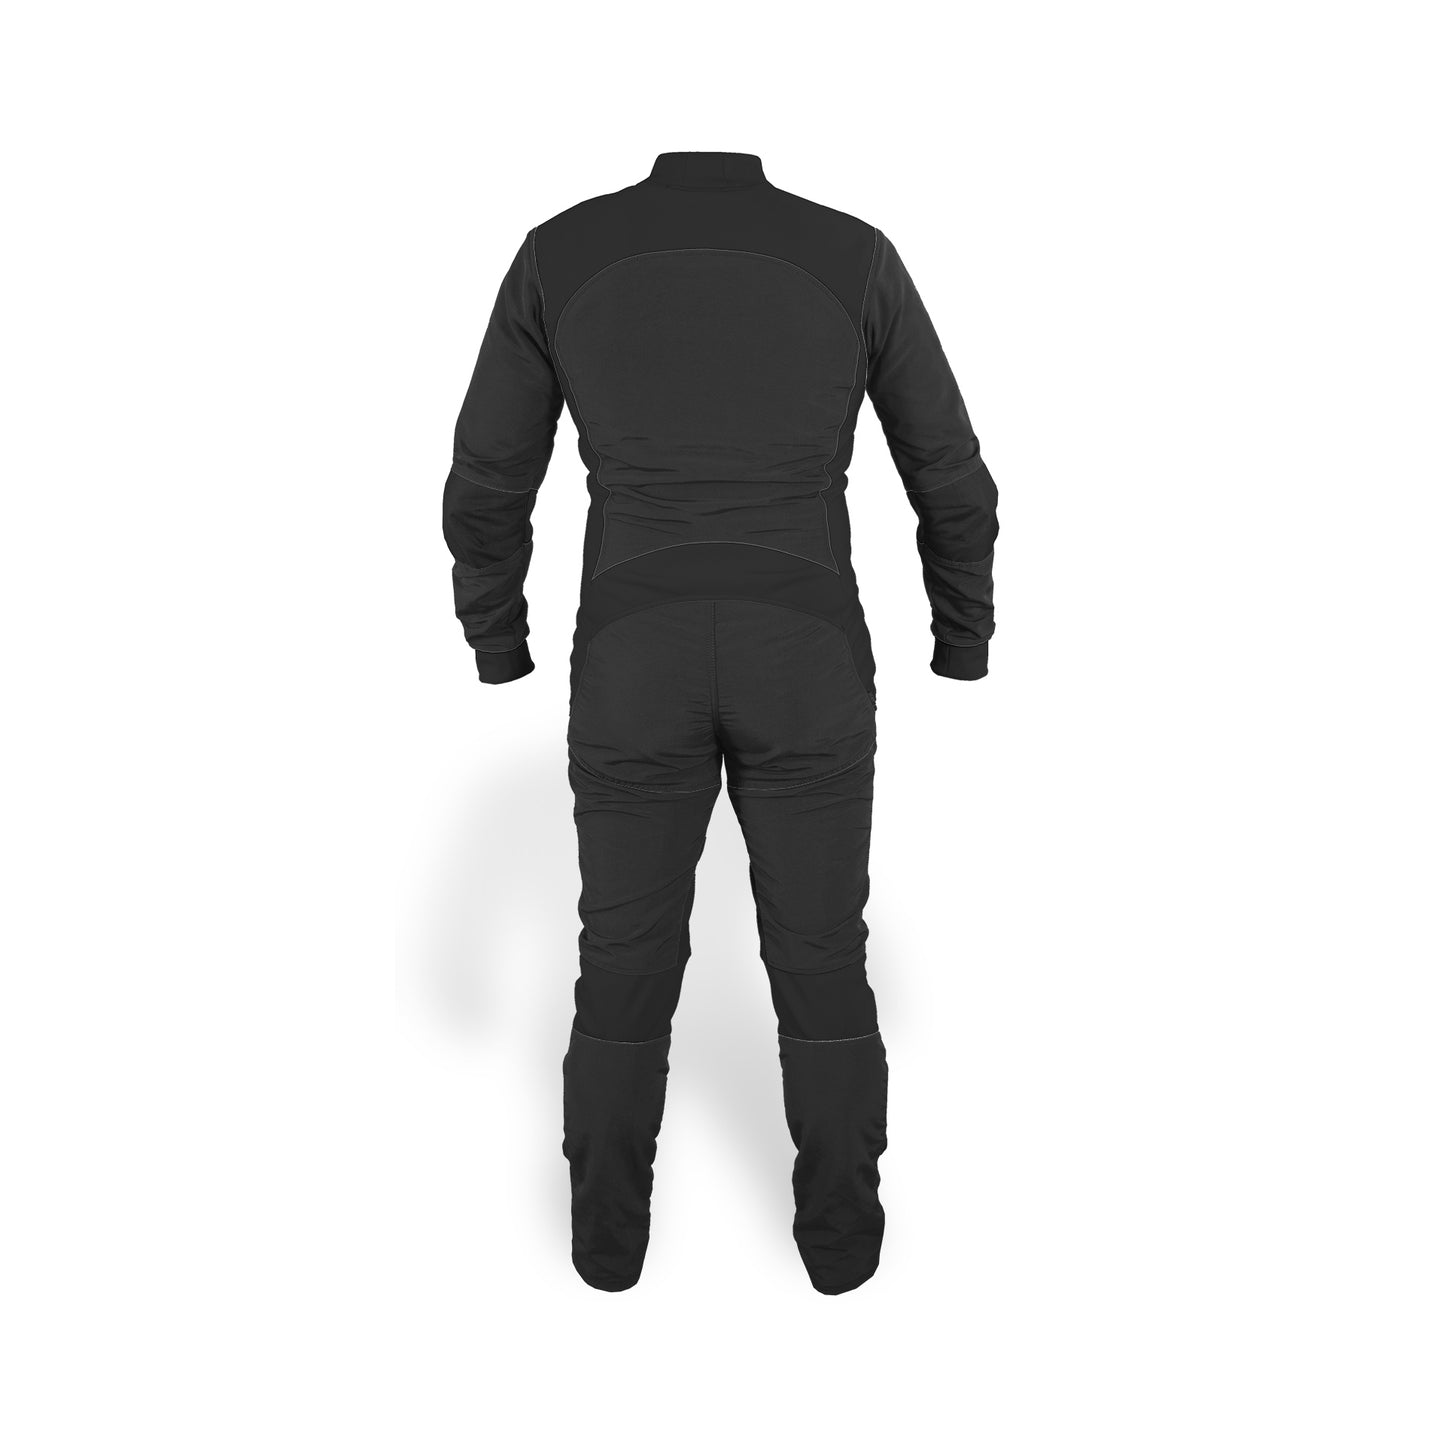 Skydiving Freefly Suit in Black Color GE-032